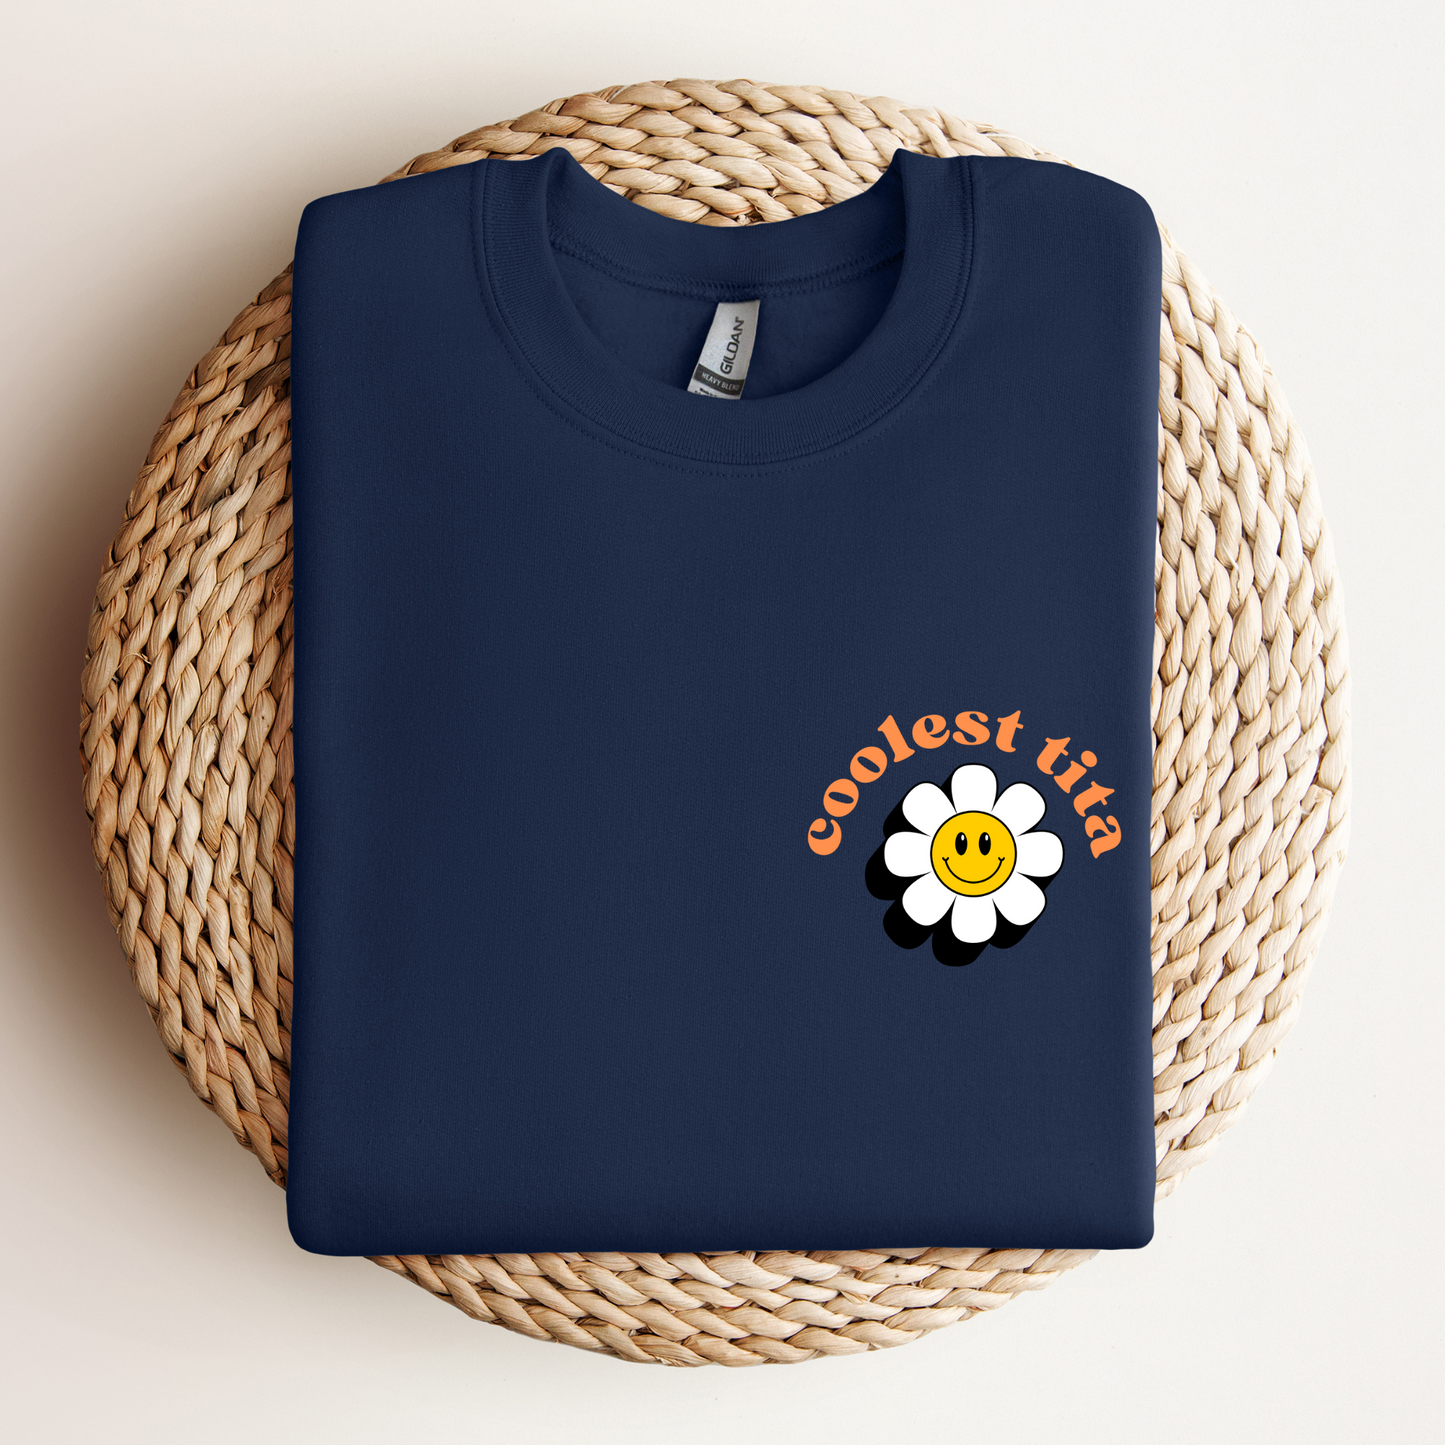 Filipino Sweatshirt Coolest Tita Smiley Embroidered Crew Neck Image 2